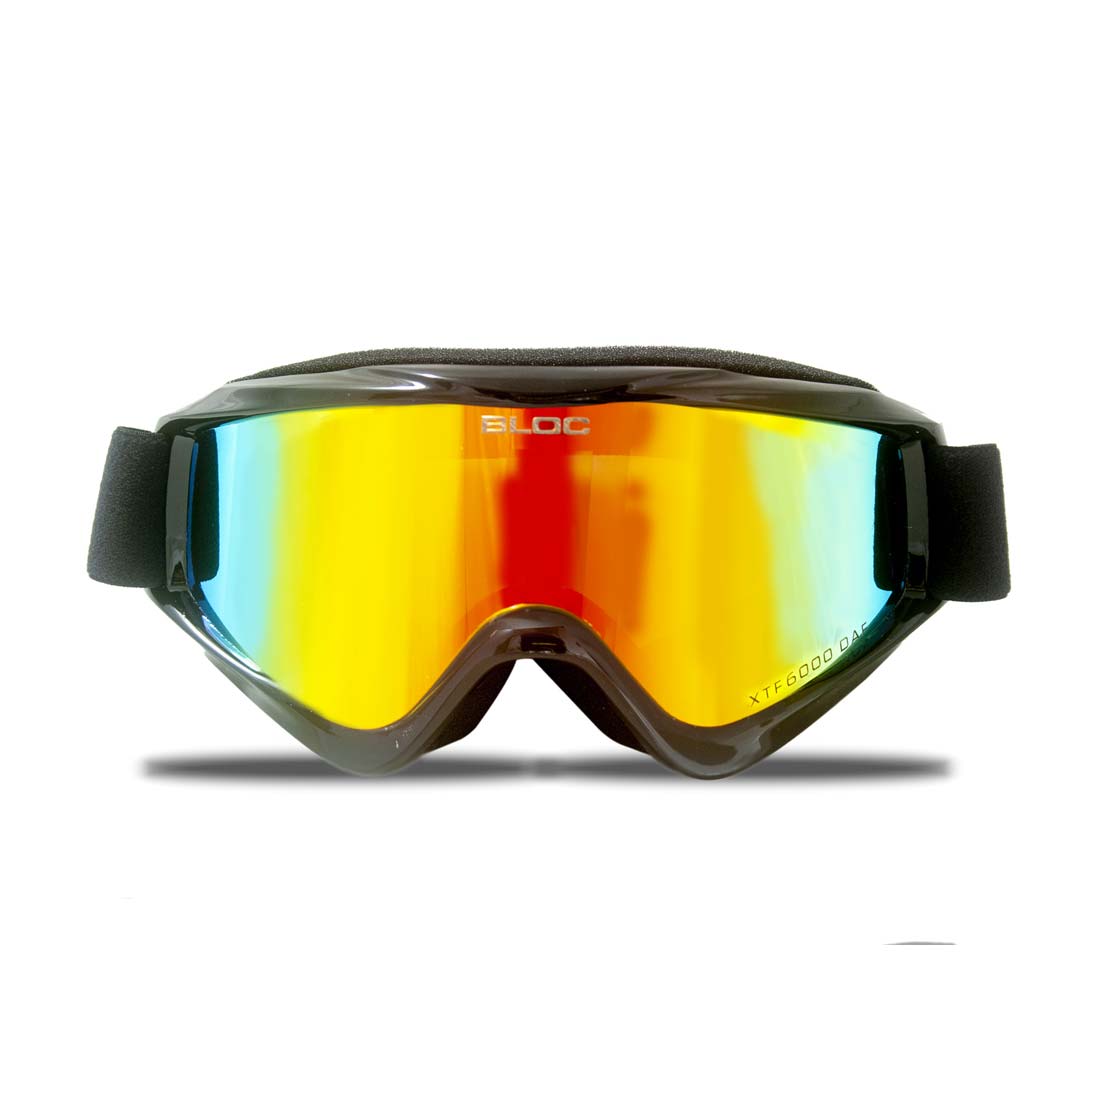 Bloc Spark Ski Goggles